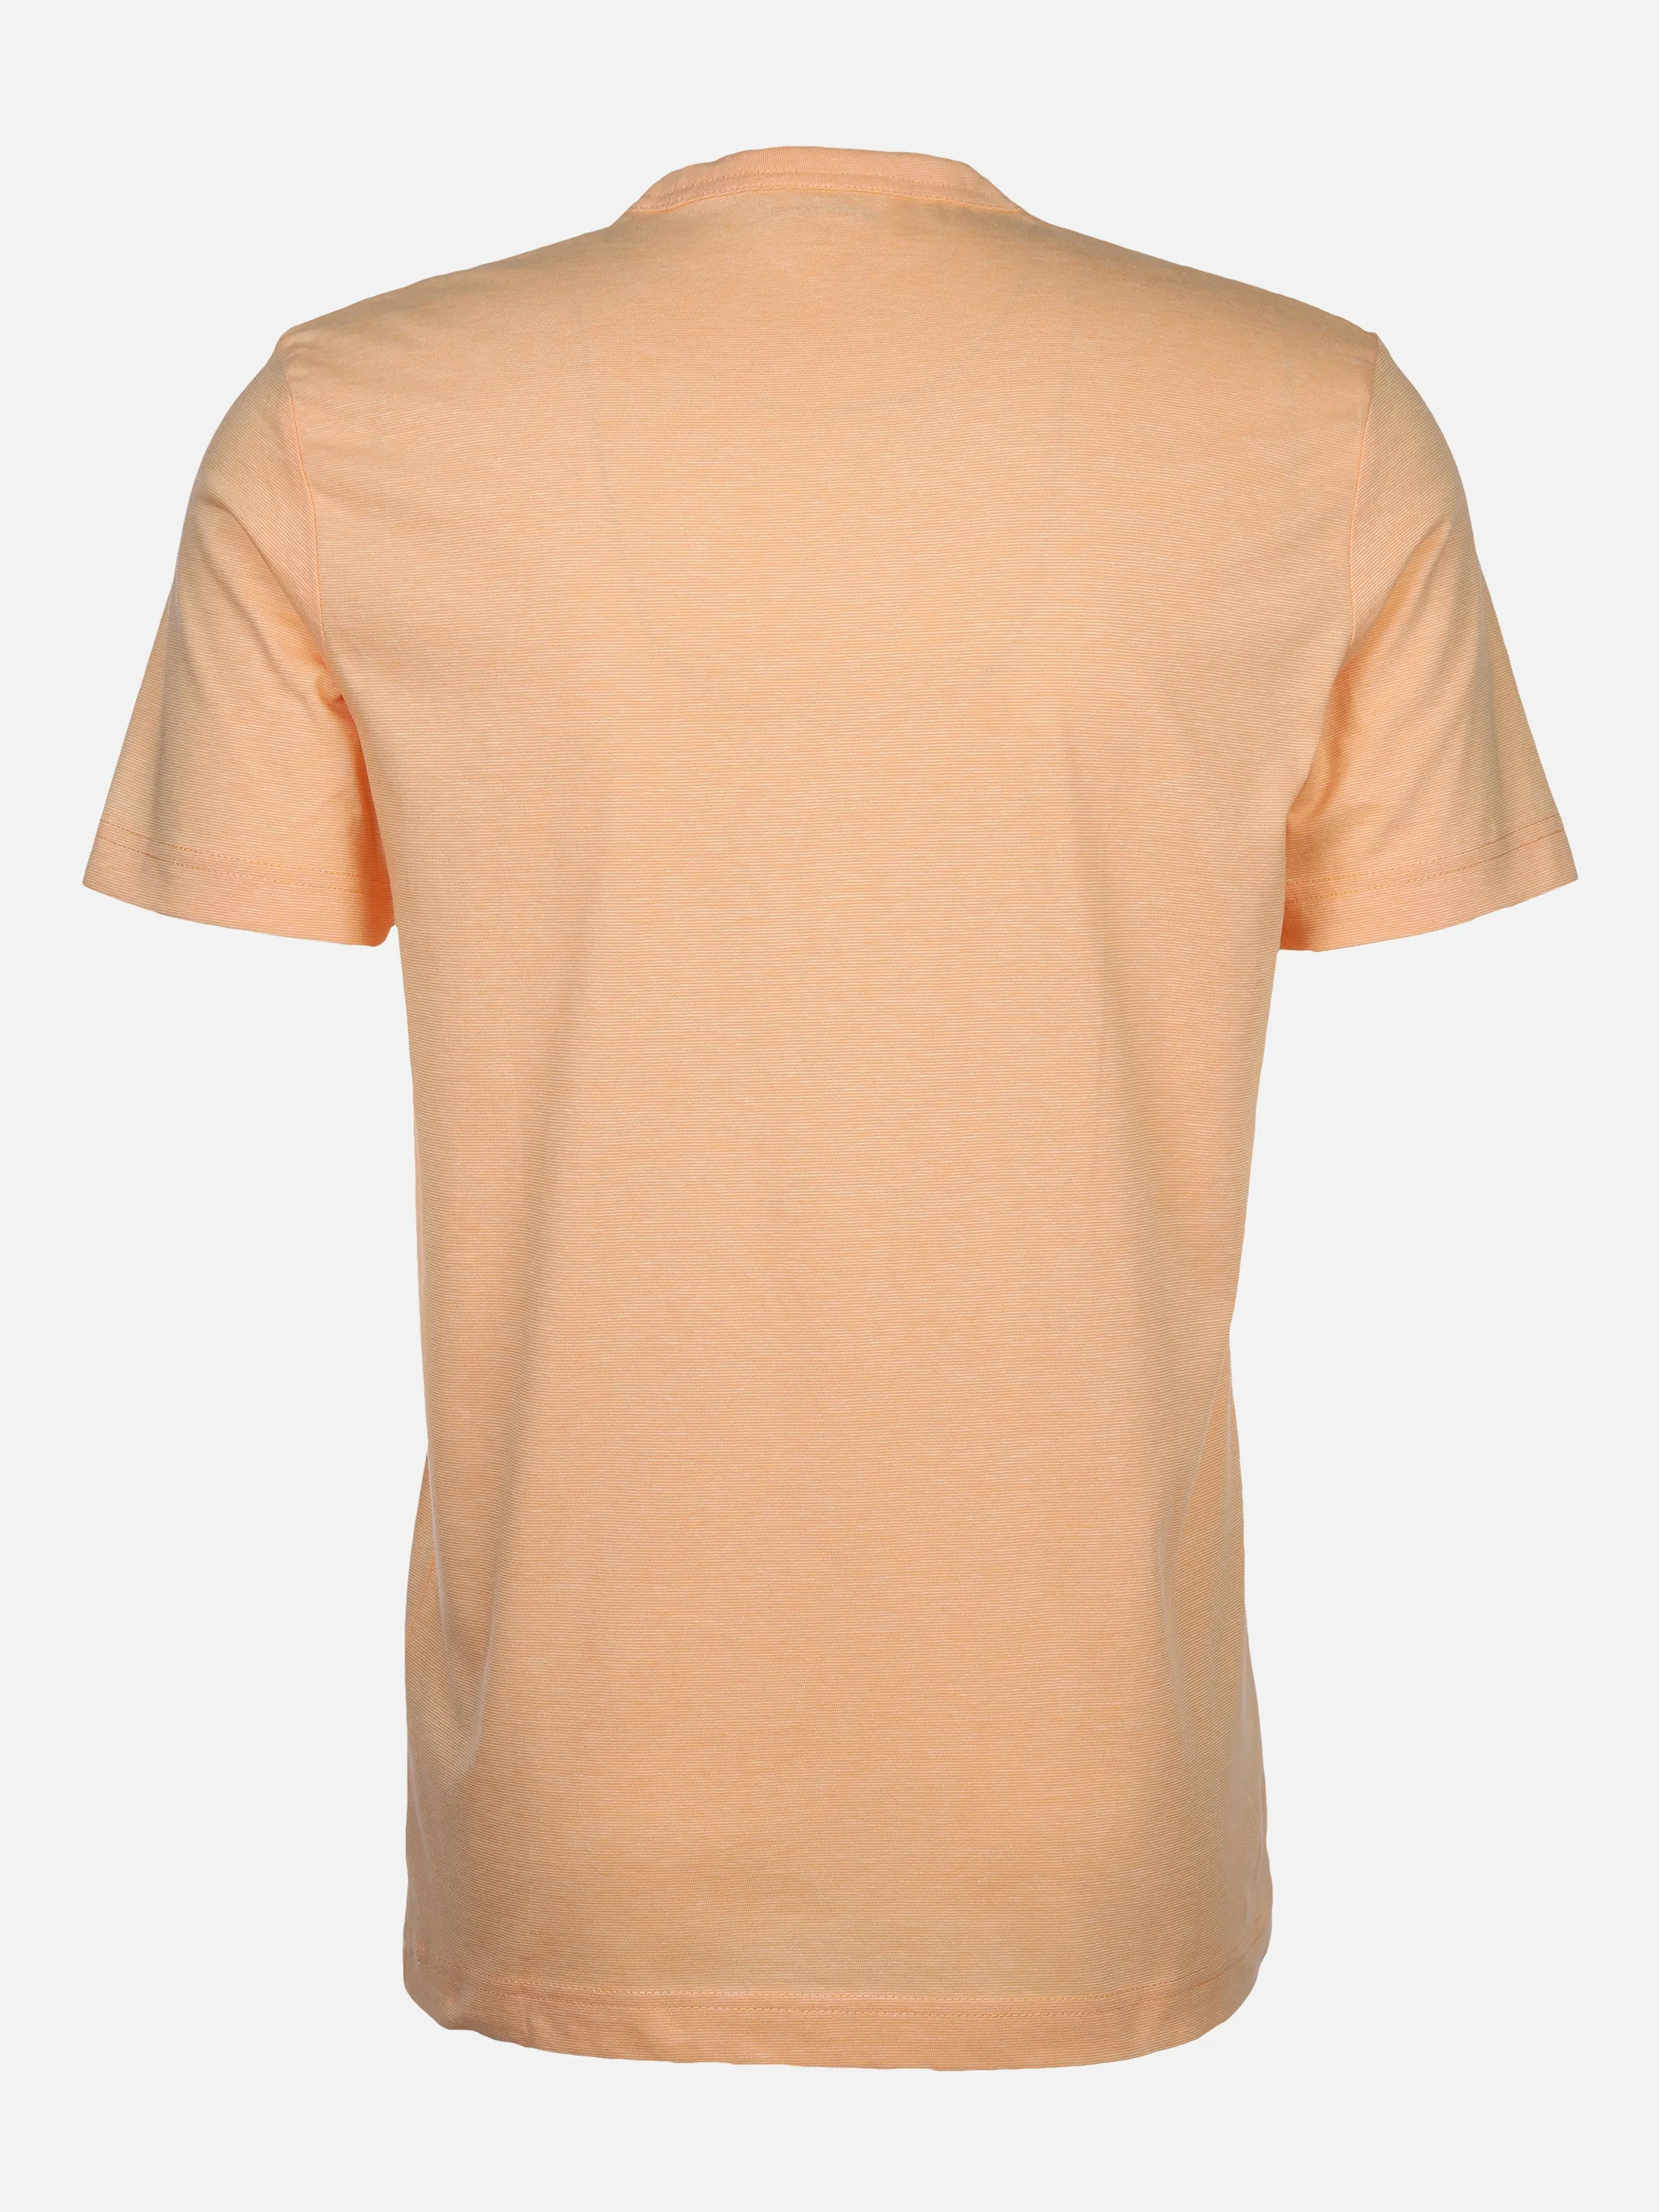 Tom Tailor 1035549 NOS striped t-shirt with print Orange 874943 31582 2